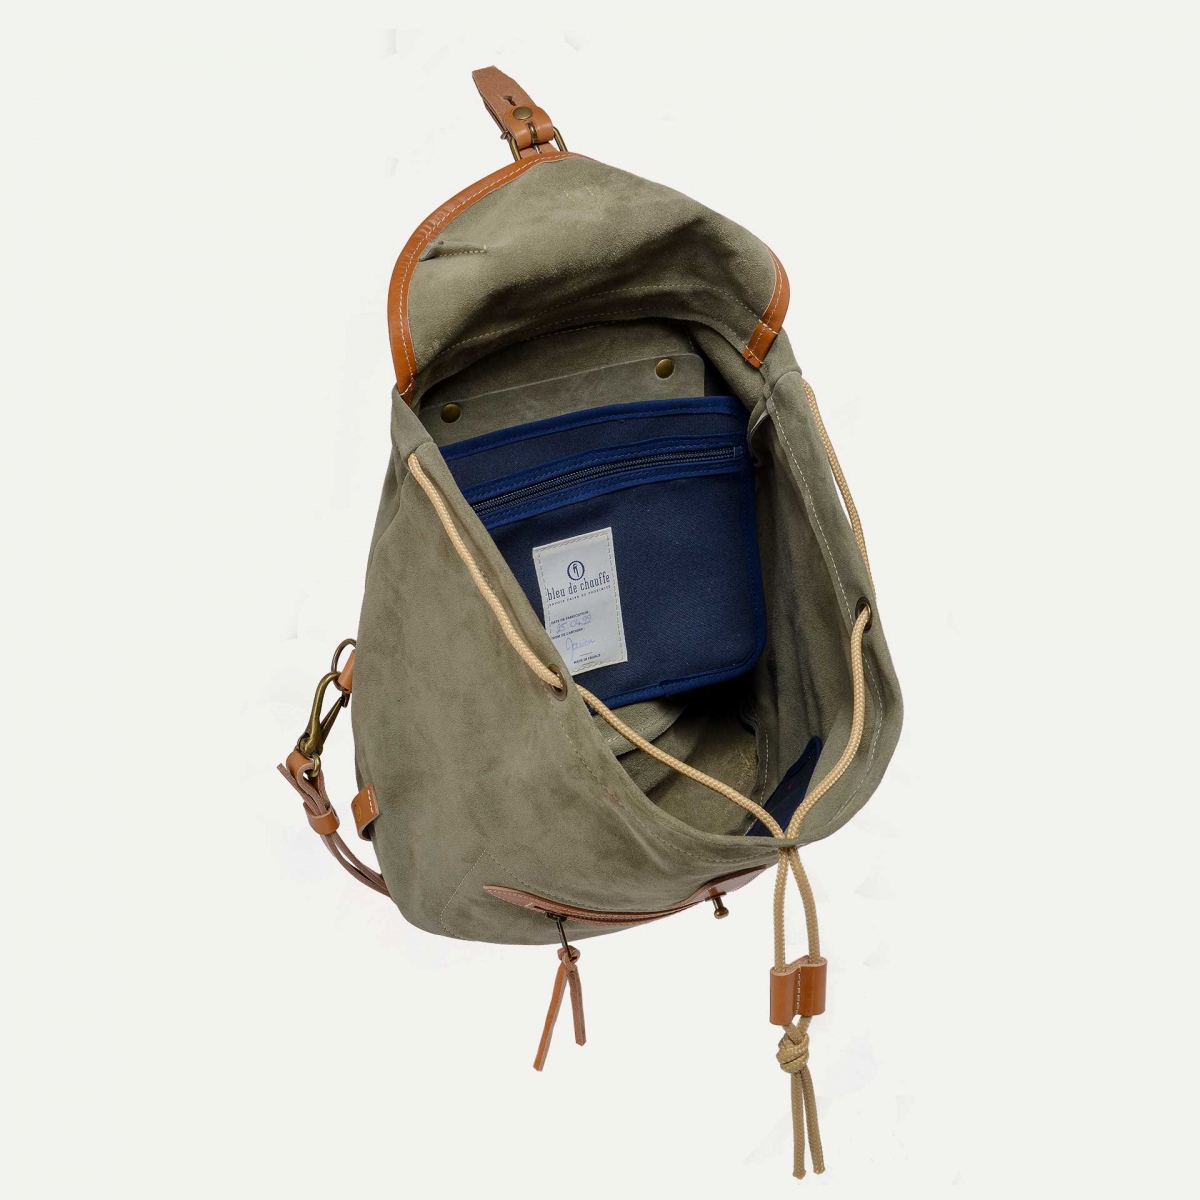 CAMP suede backpack by Bleu de Chauffe — Calame Palma